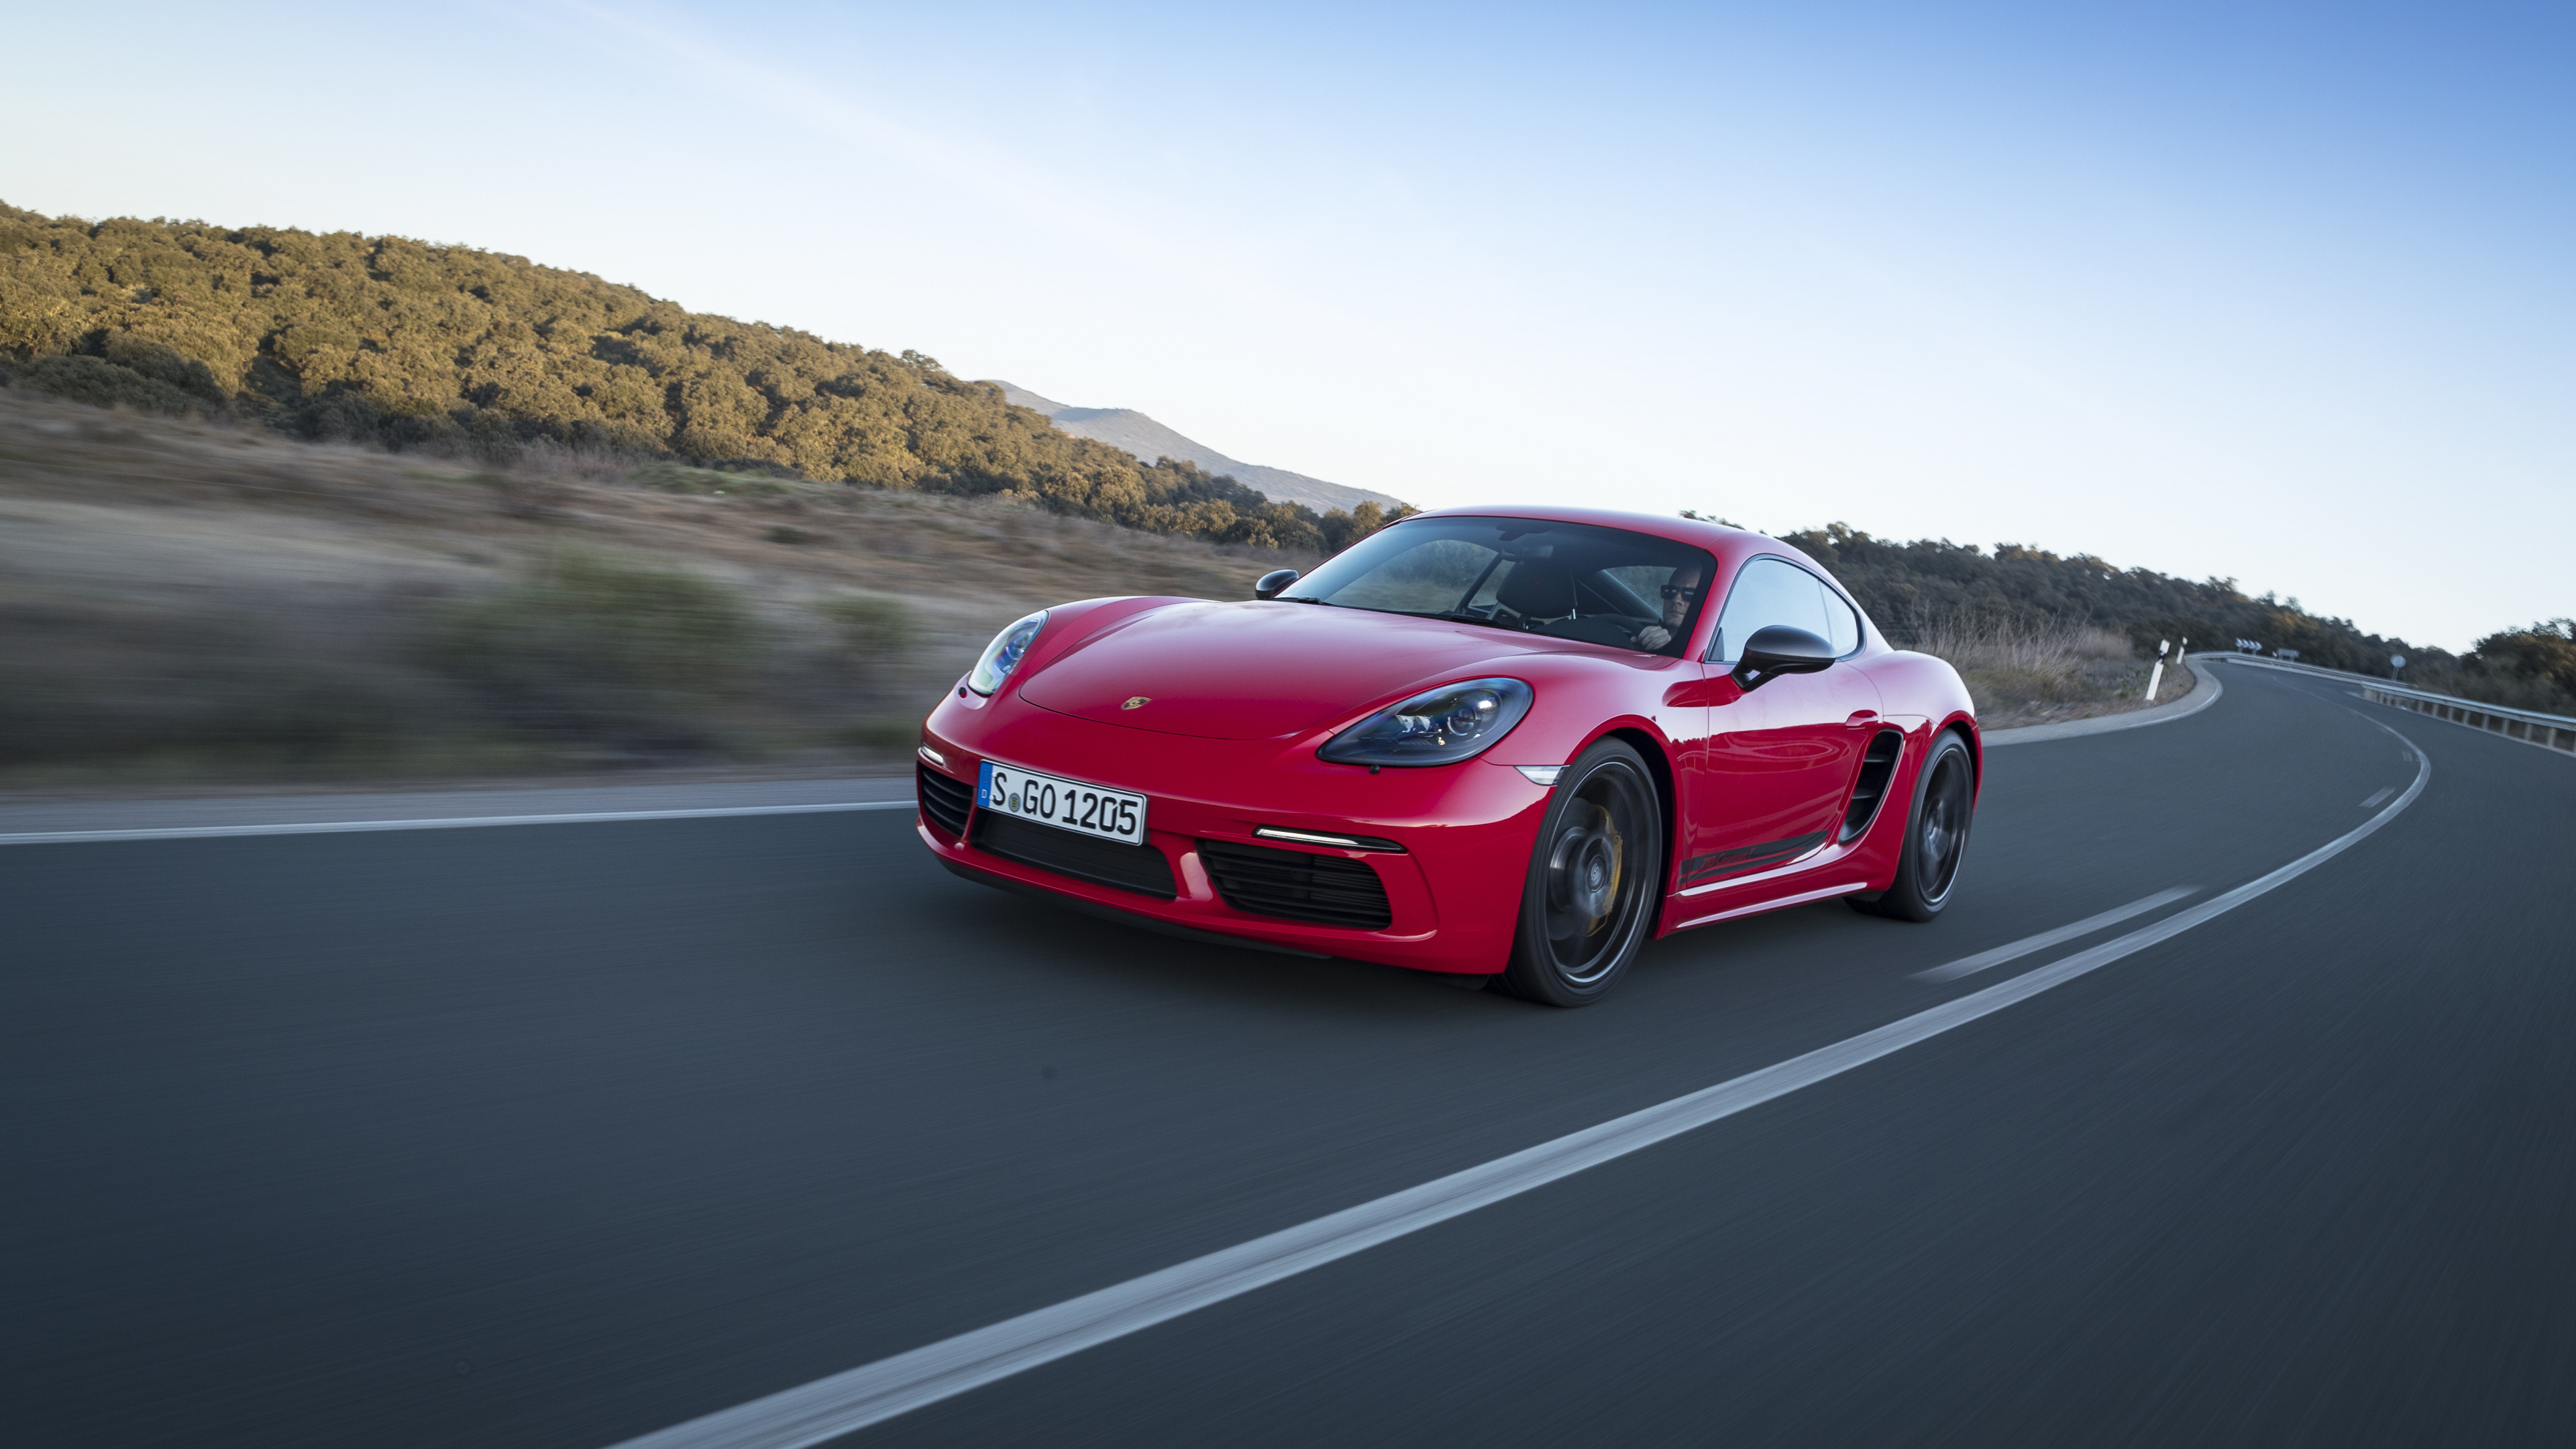 Porsche 718, Red sports car, 4k wallpaper, HD image, 3840x2160 4K Desktop